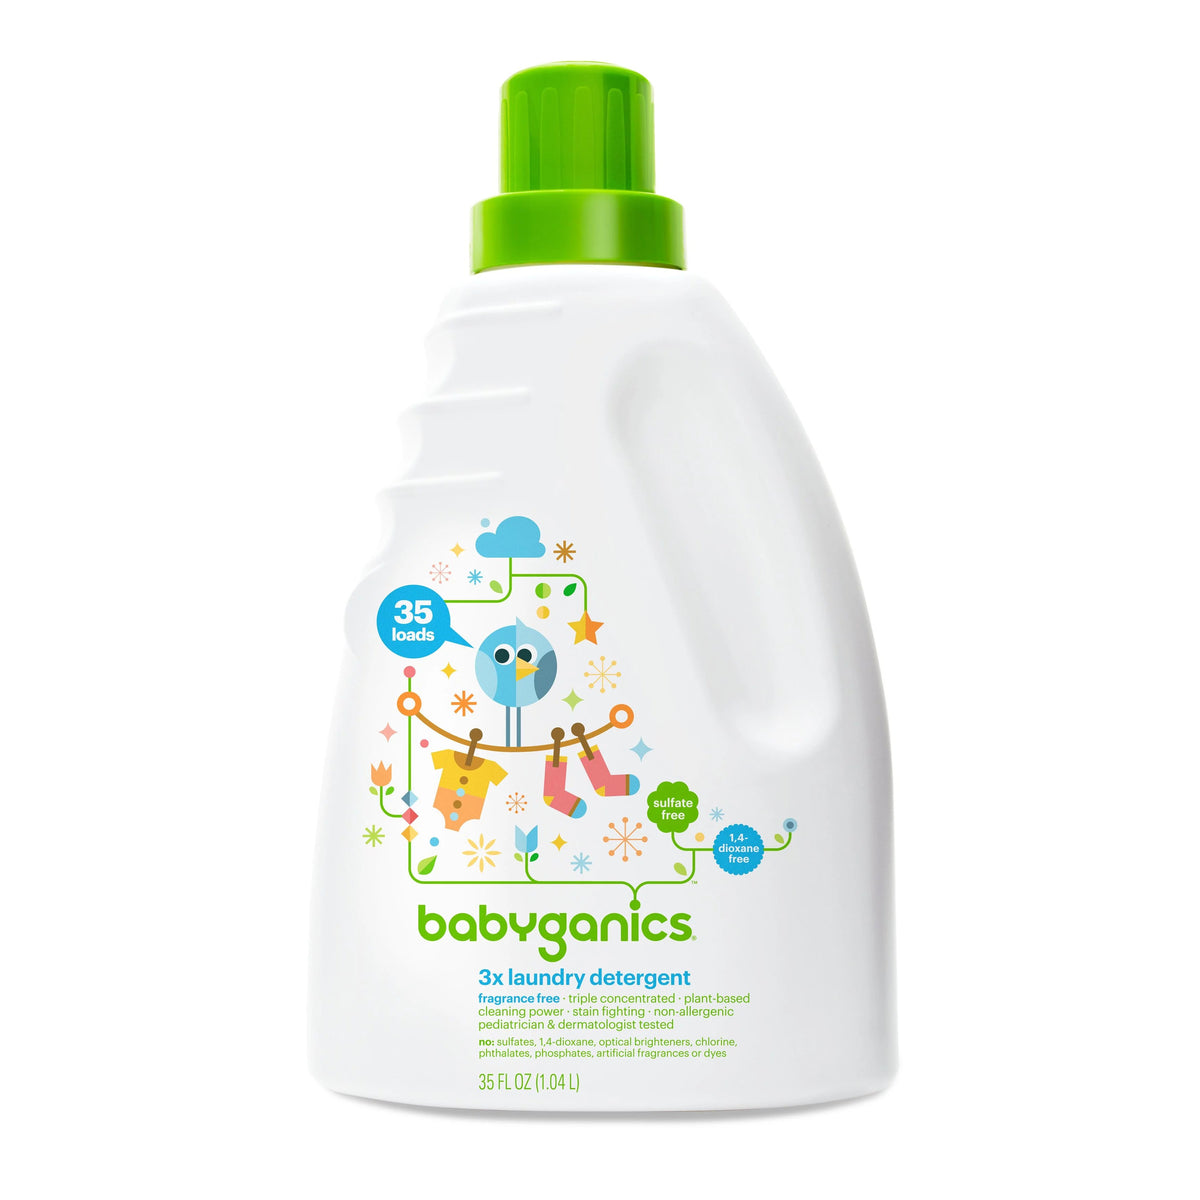 babyganics-3x-laundry-detergent-fragrance-free-104l- (1)